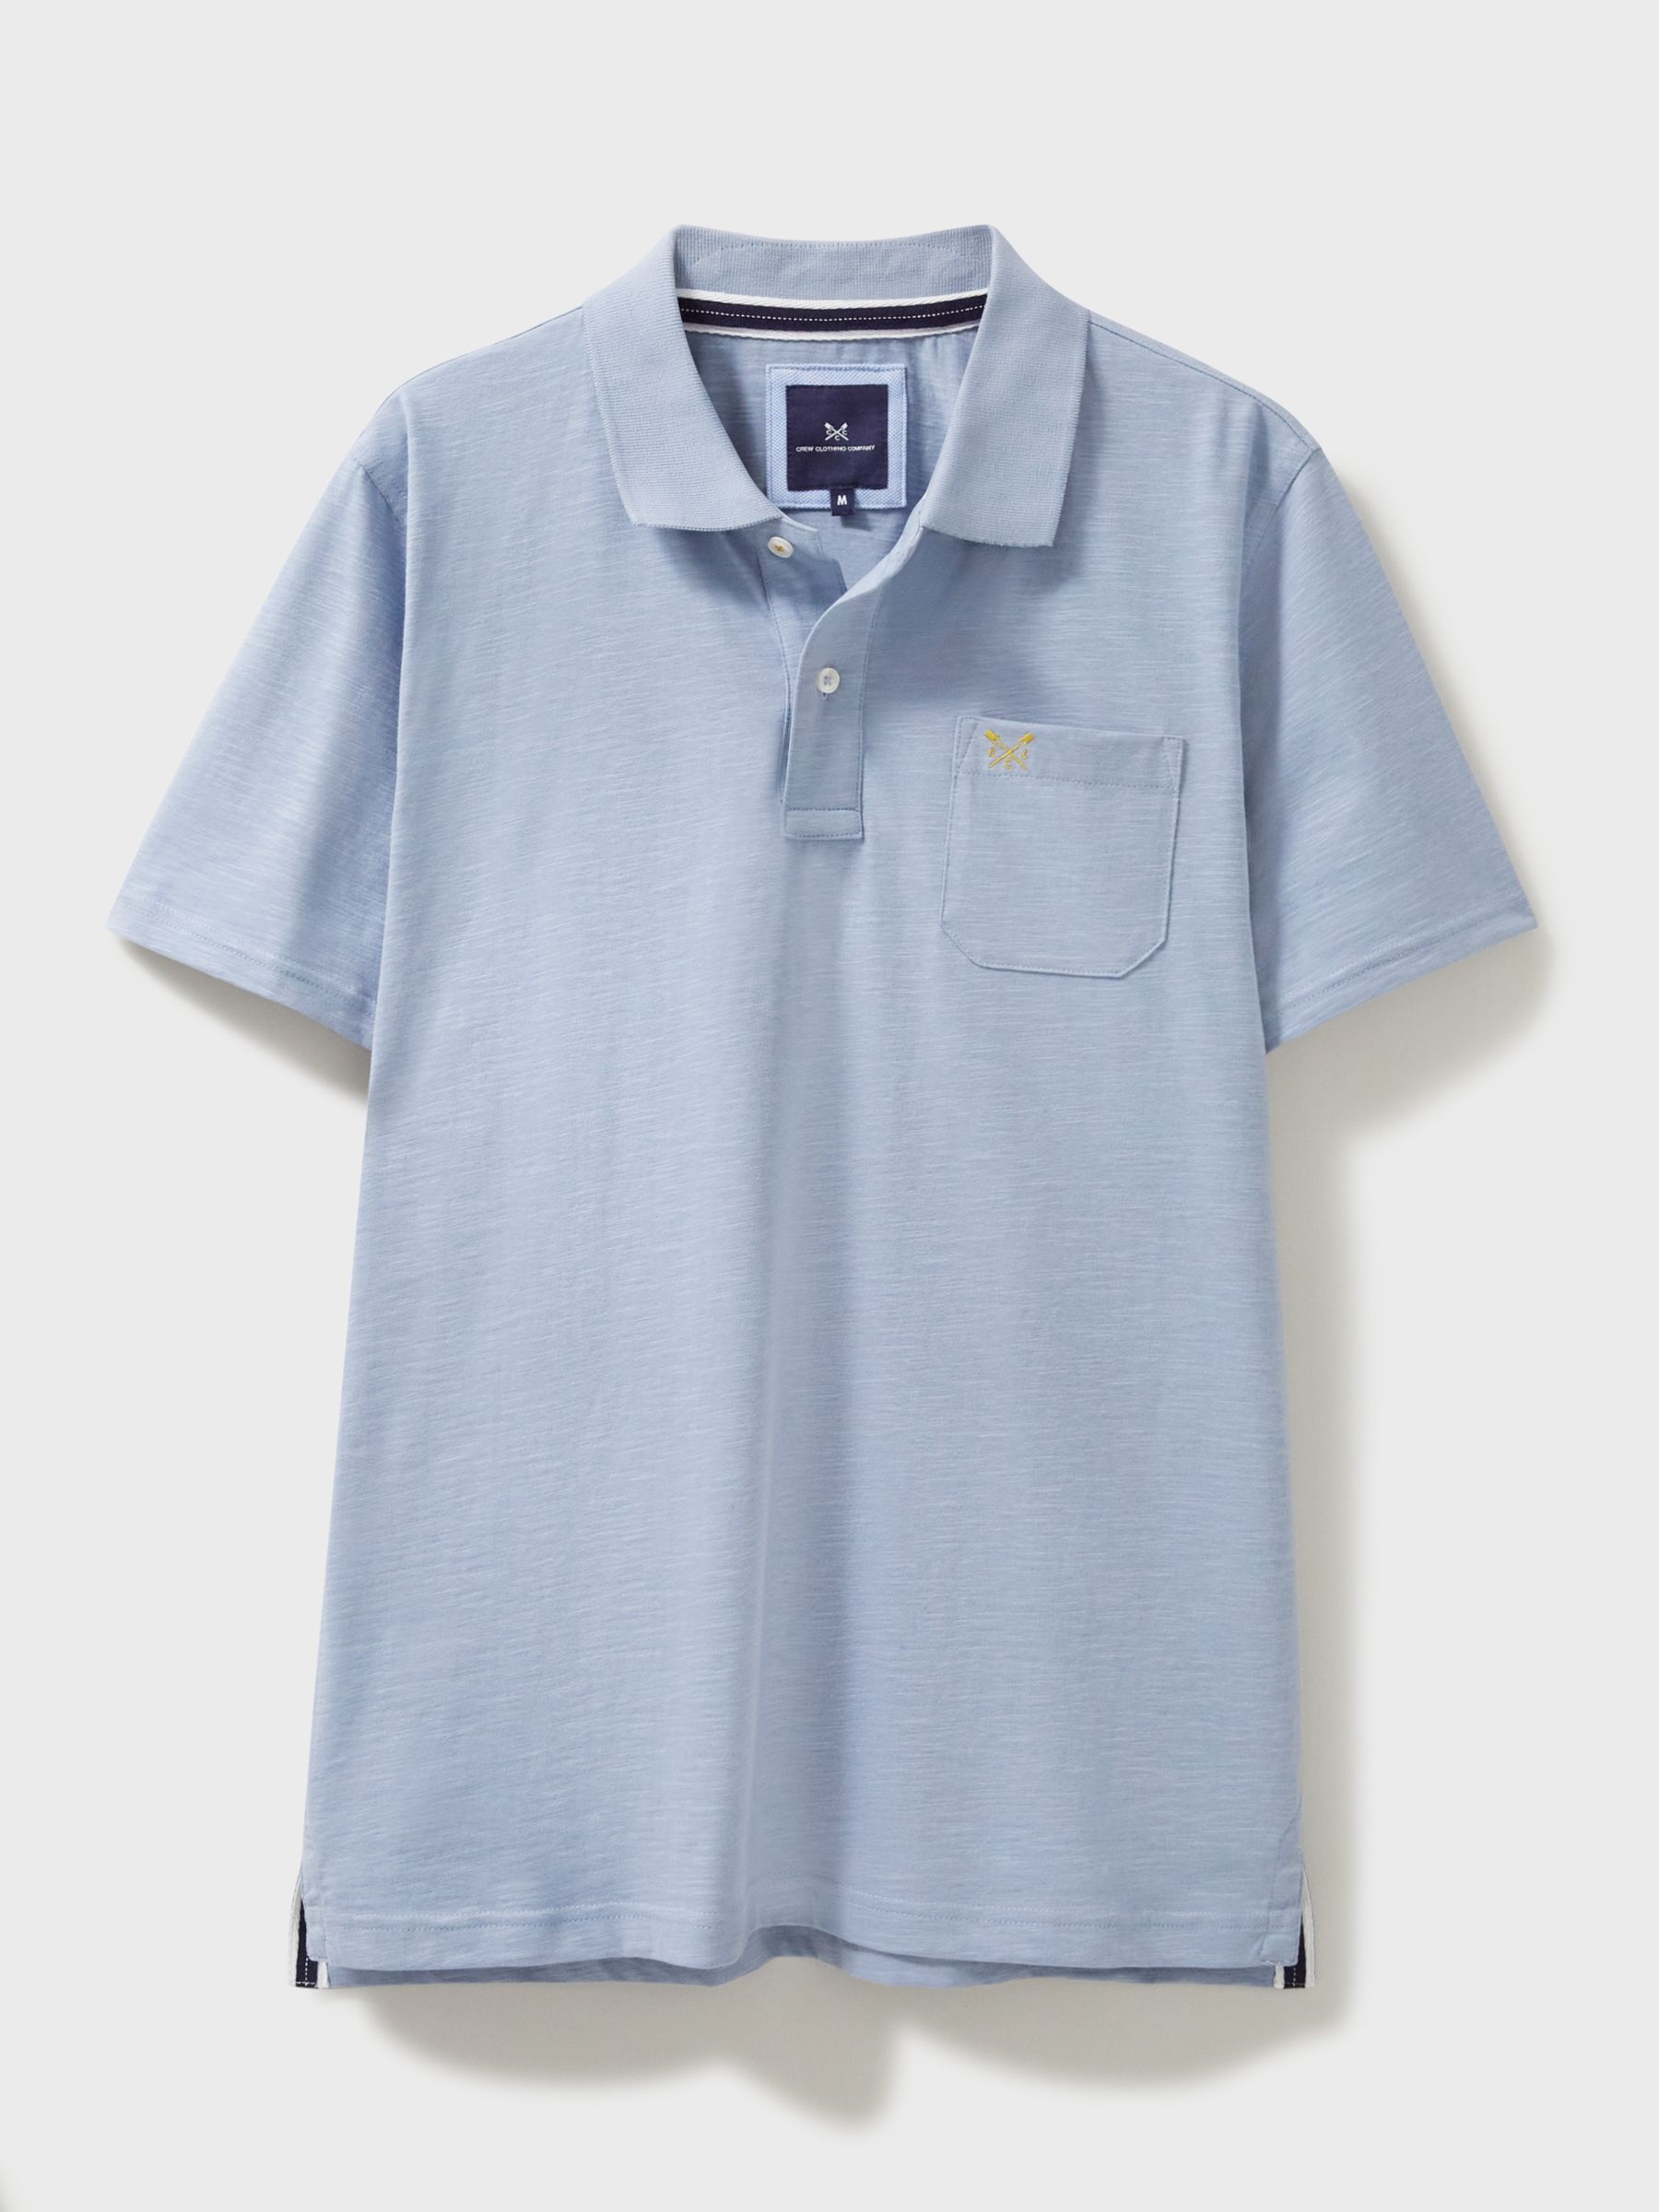 Crew Clothing Polo Shirt, Light Blue, L